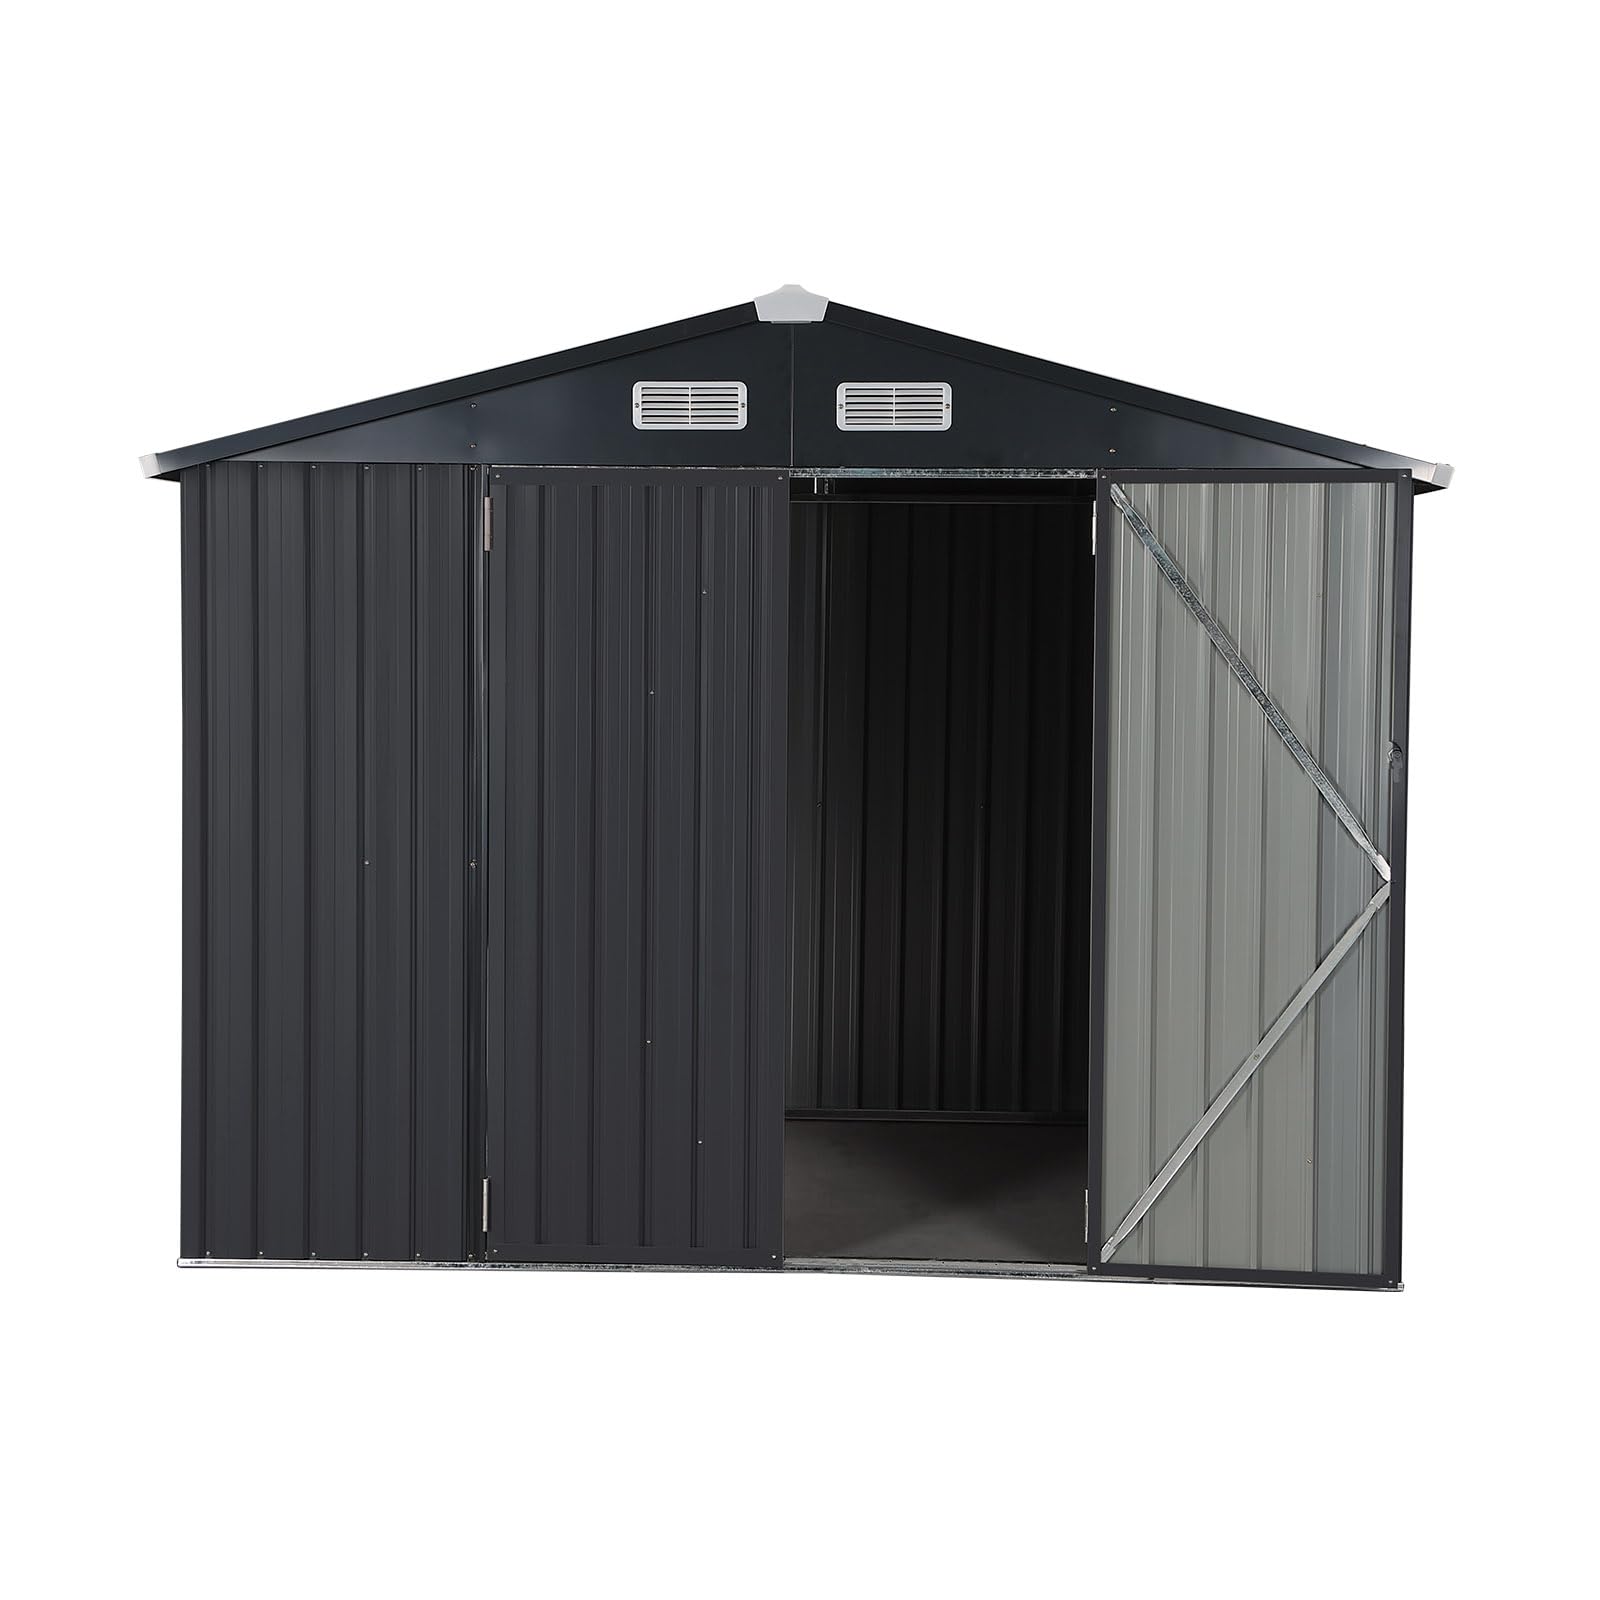 Verano Garden 8’x6’ Outdoor Storage Shed, Galvanized Metal Steel Shed,Double Door W/Lock, Garden Storage for Backyard, Patio, Lawn (96.65"x63.39"x77.17)